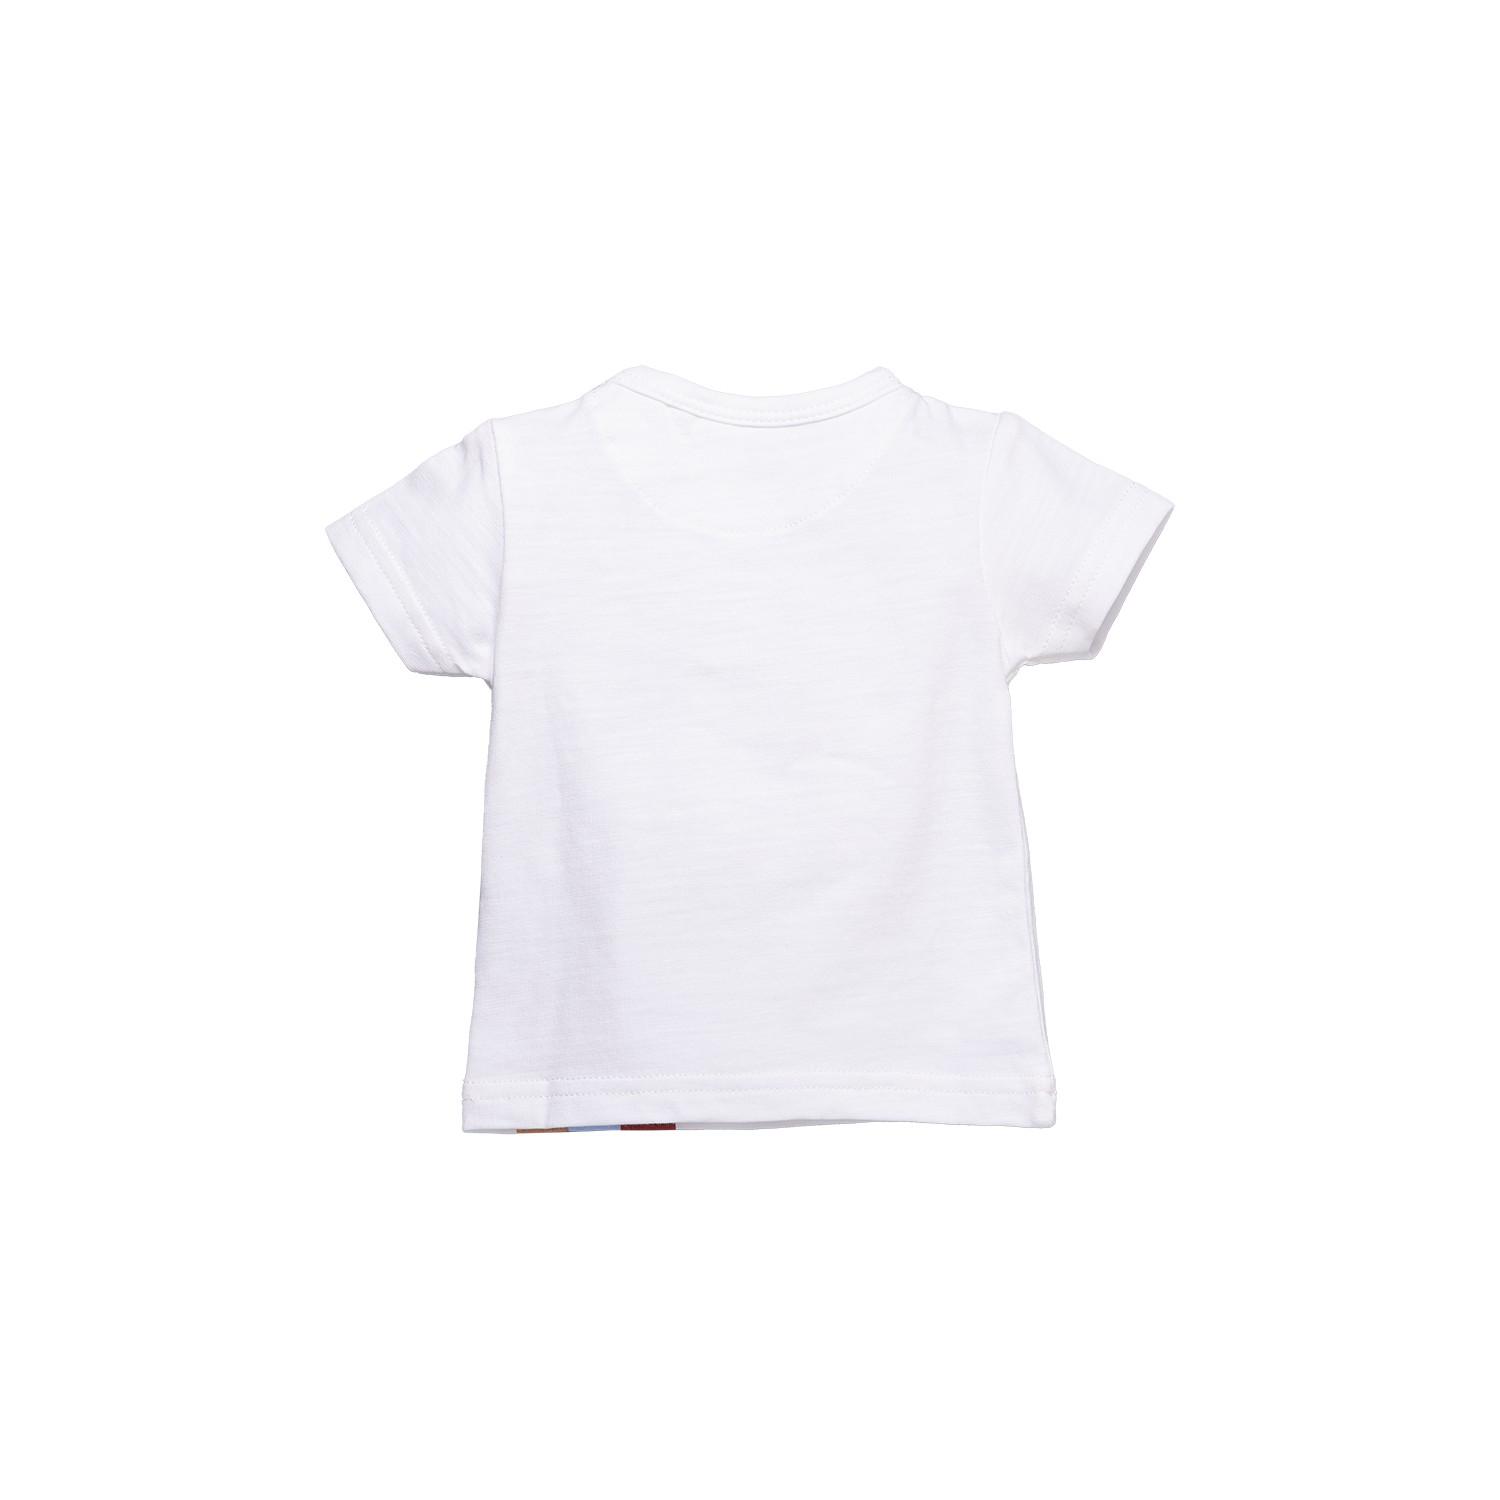 Bess - T-Shirt Korte Mouwen B White